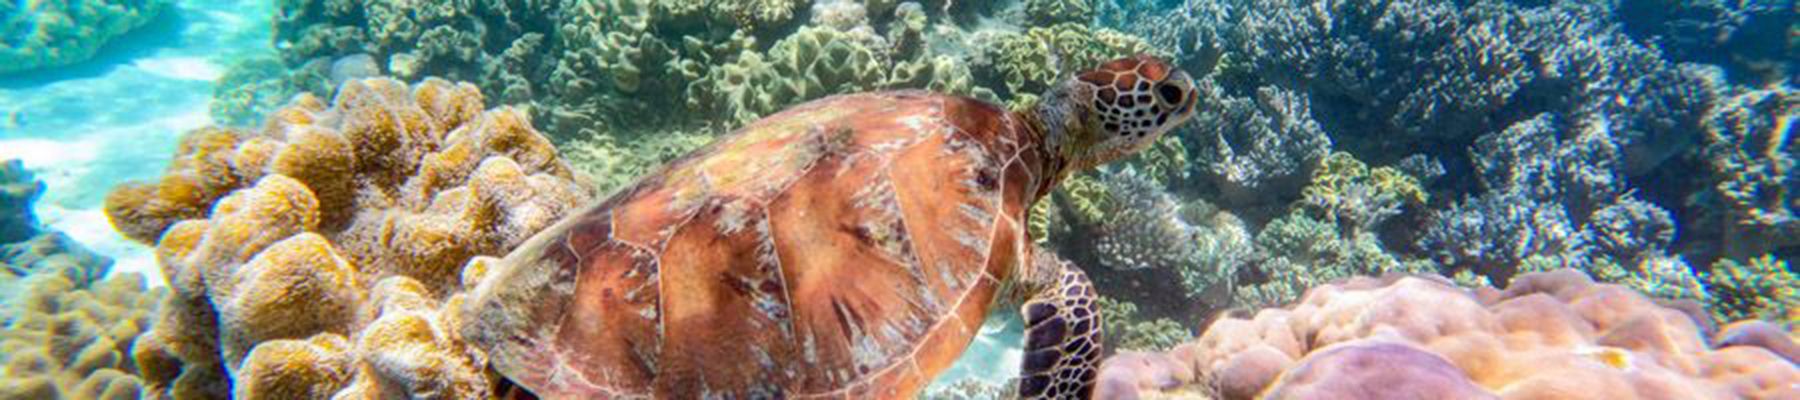 Green sea turtle amongst coral reefs